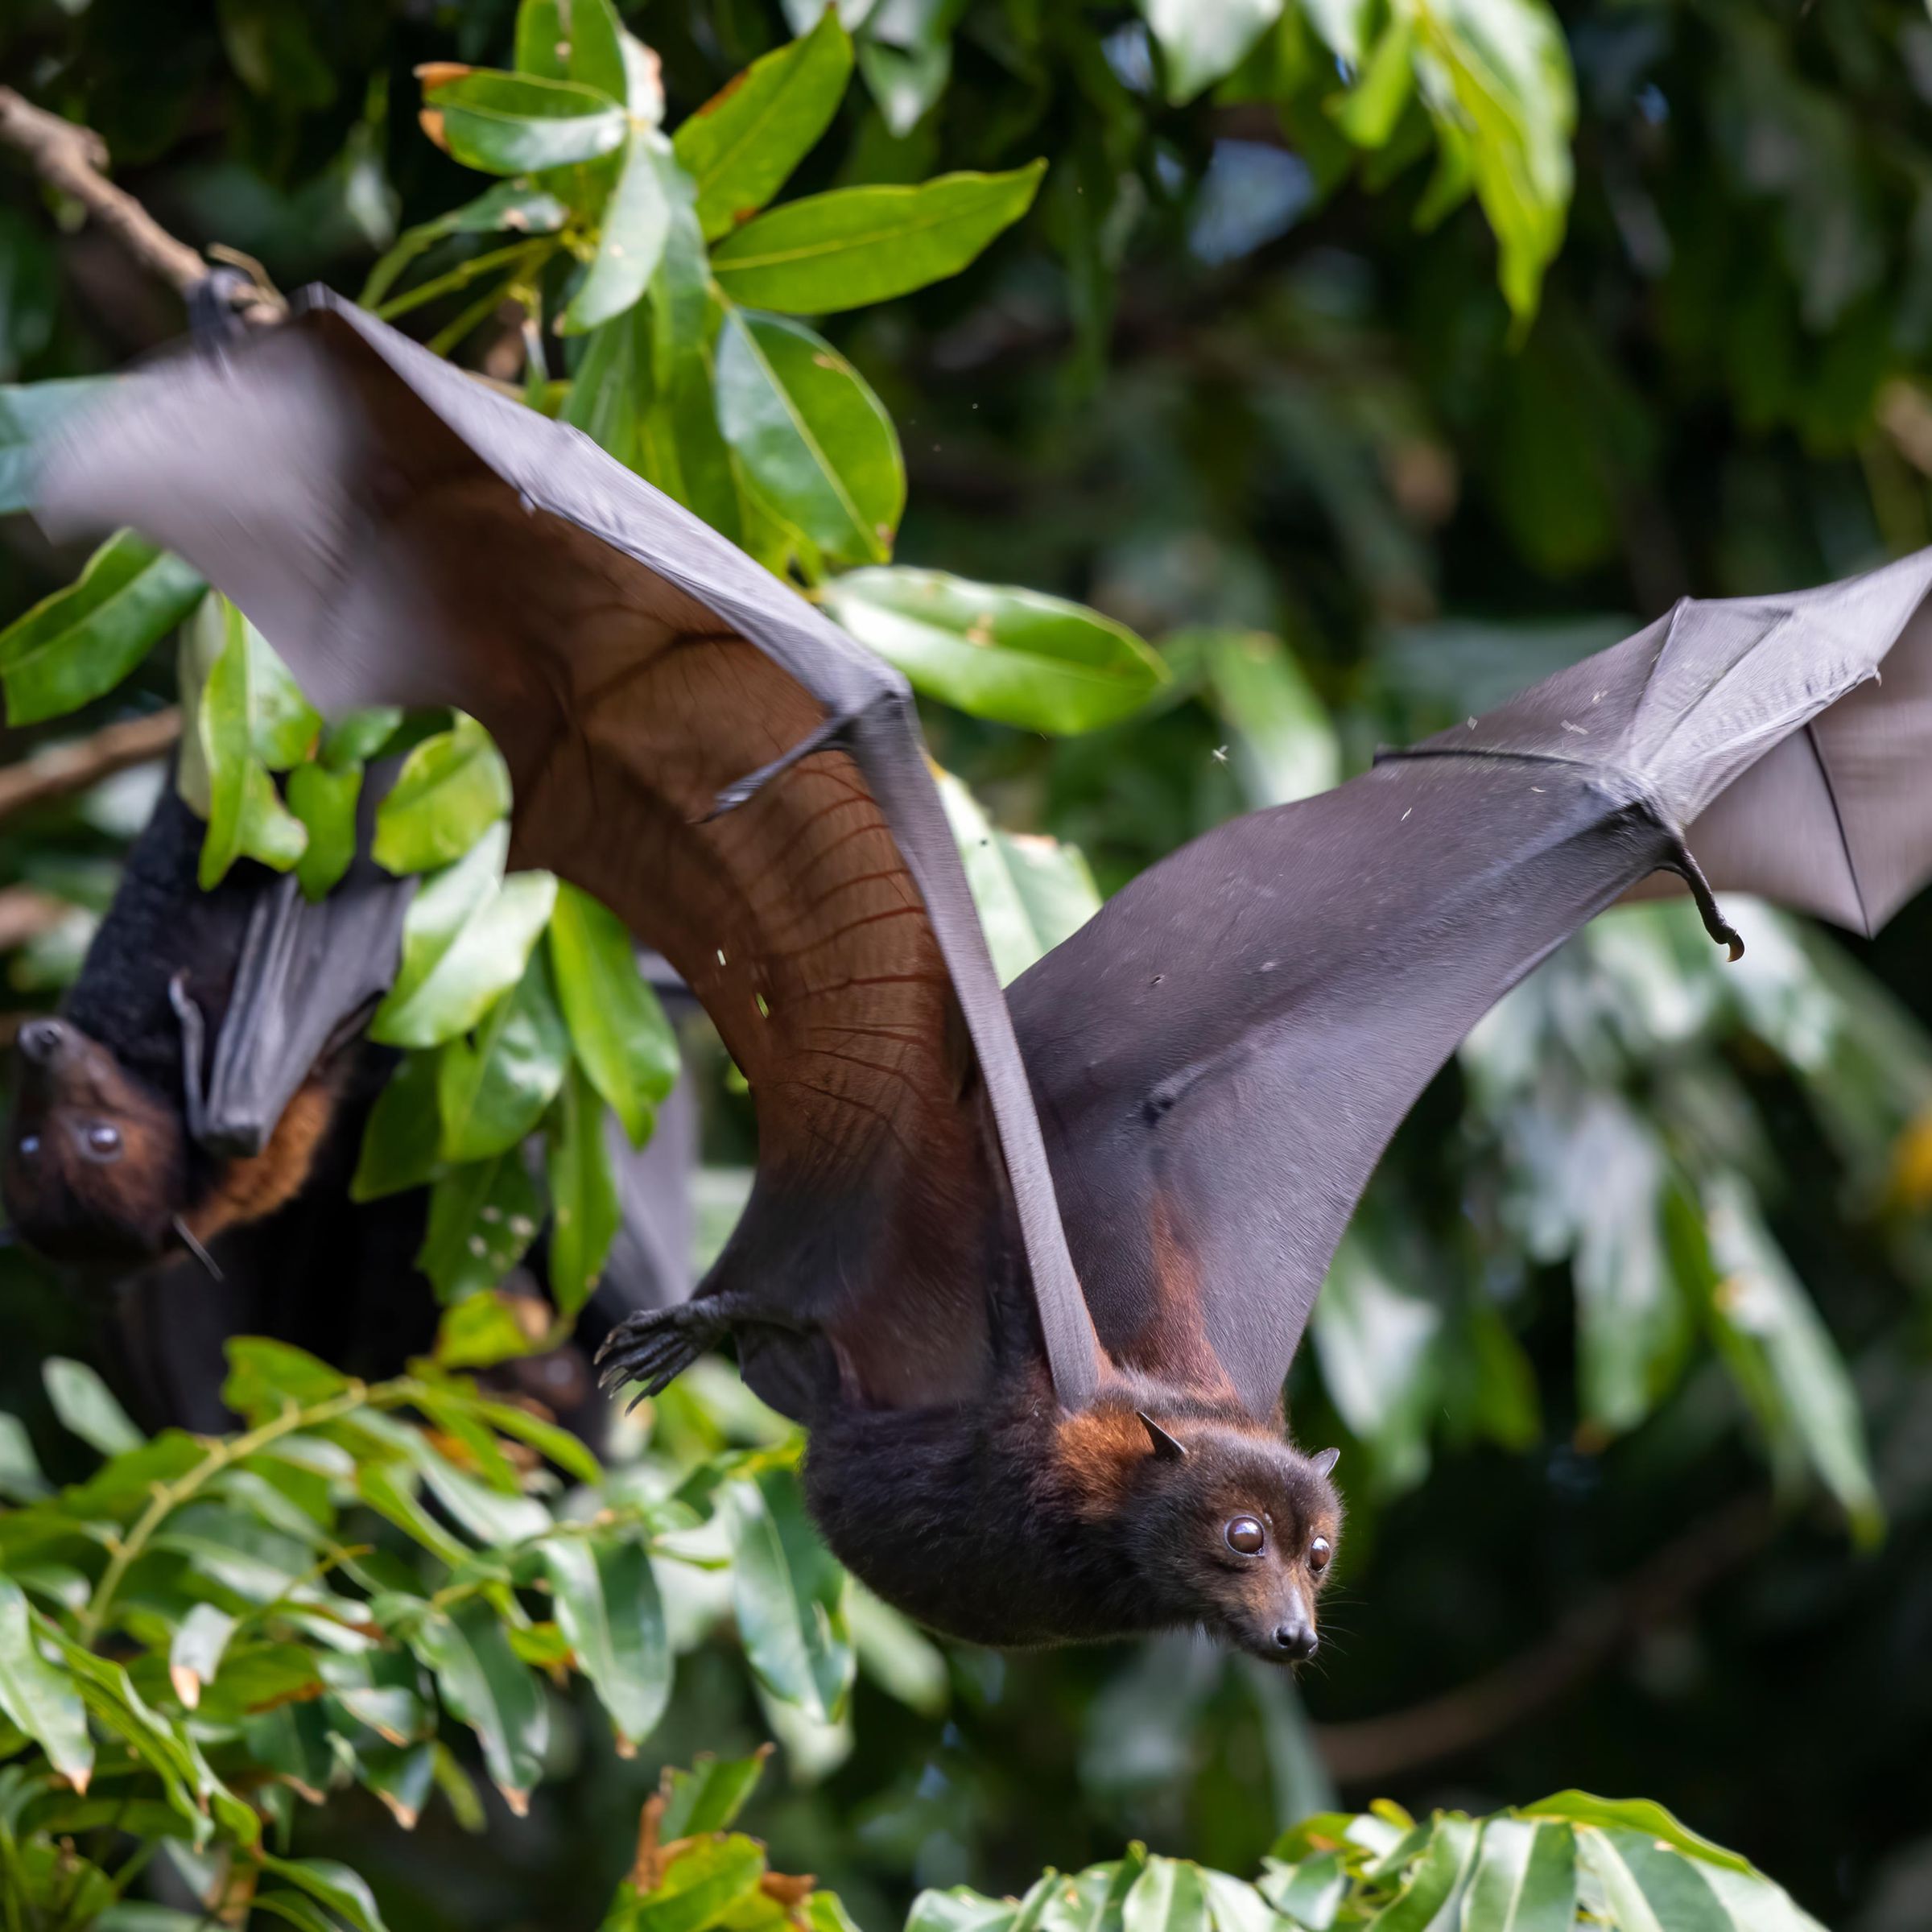 A bat flying among leaves